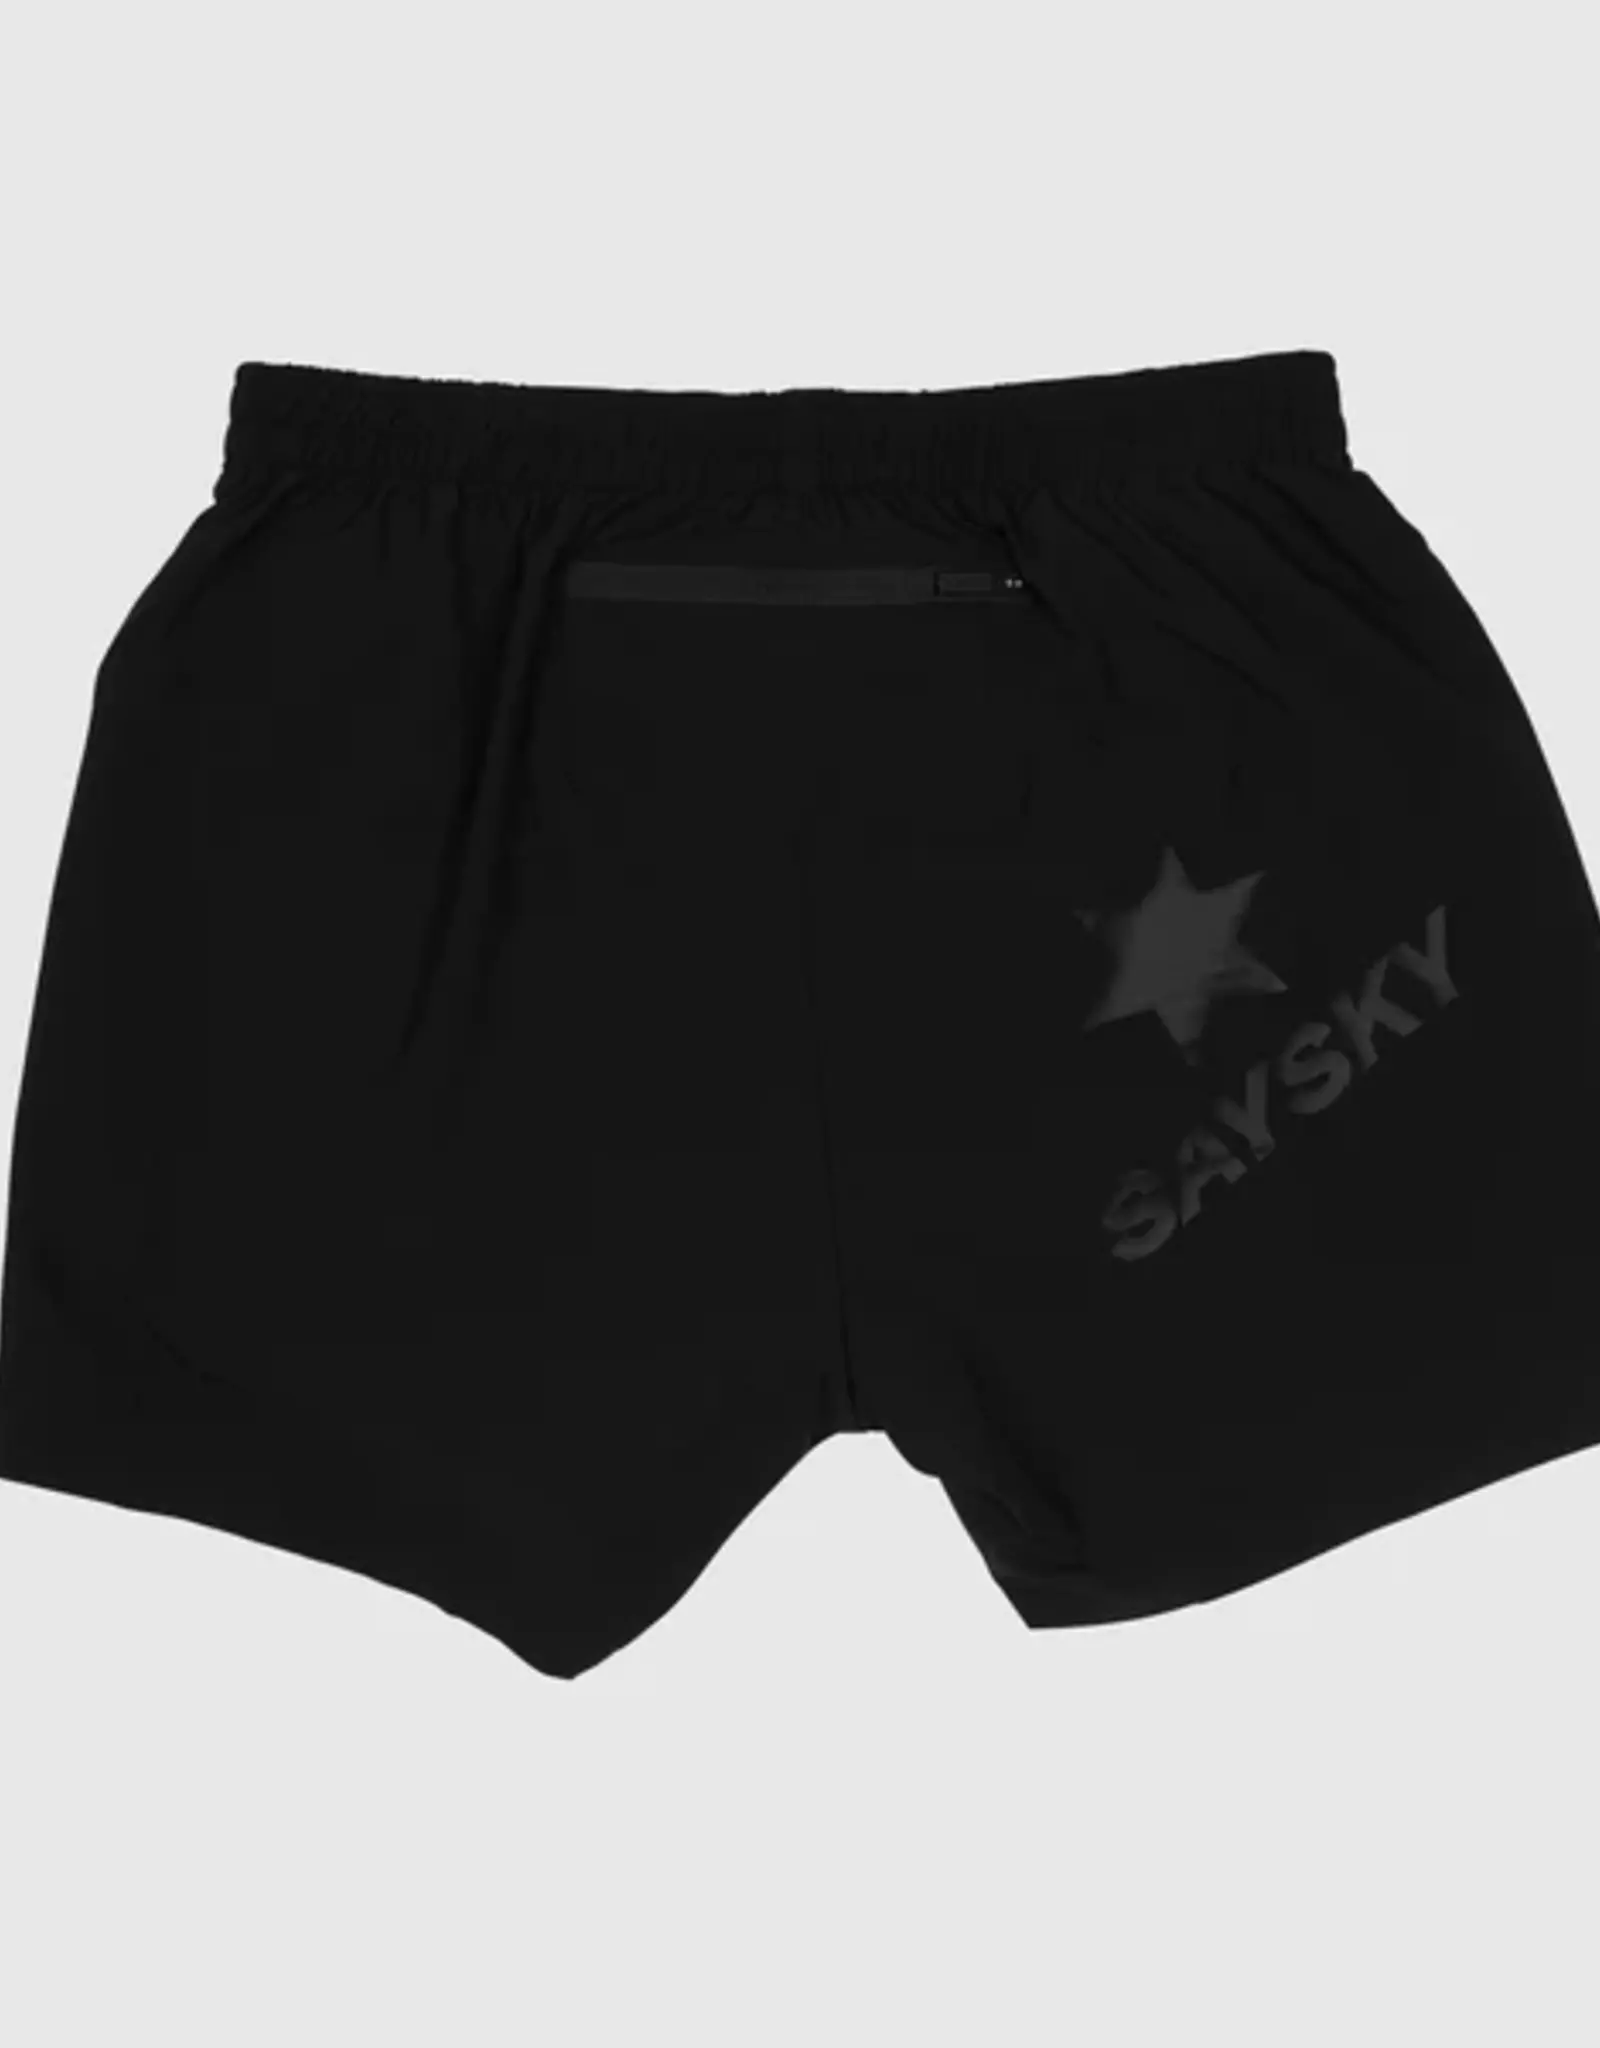 Saysky Pace shorts 5" ( S 24)